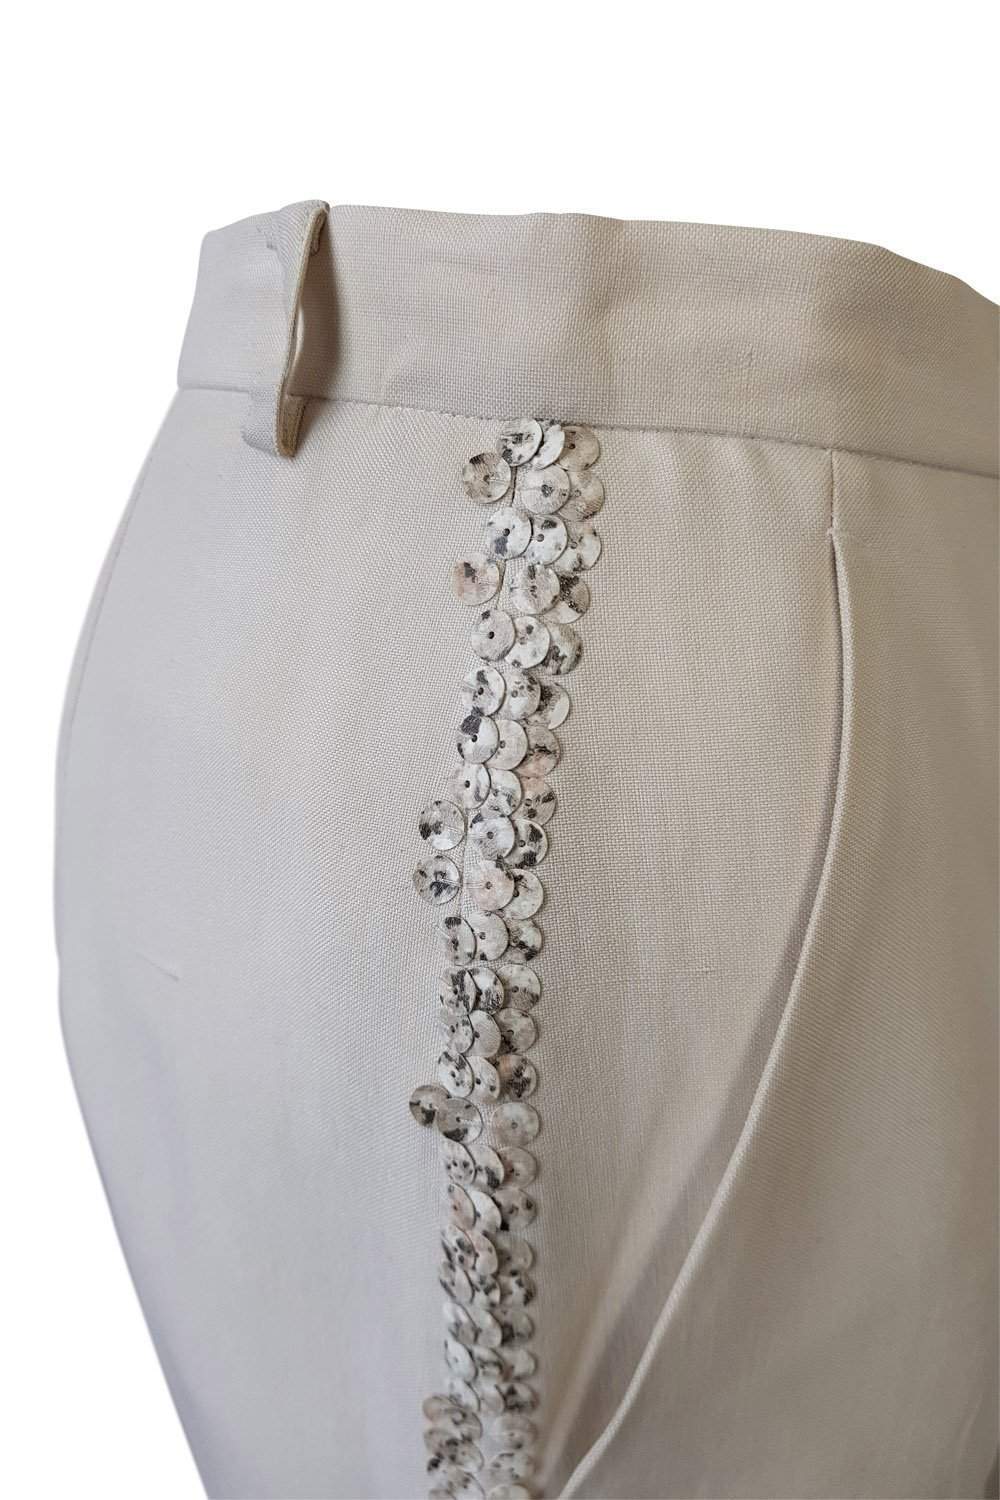 CERRUTI 1881 Cream Silk and Shell Tuxedo Style Trousers (44)-Cerruti-The Freperie